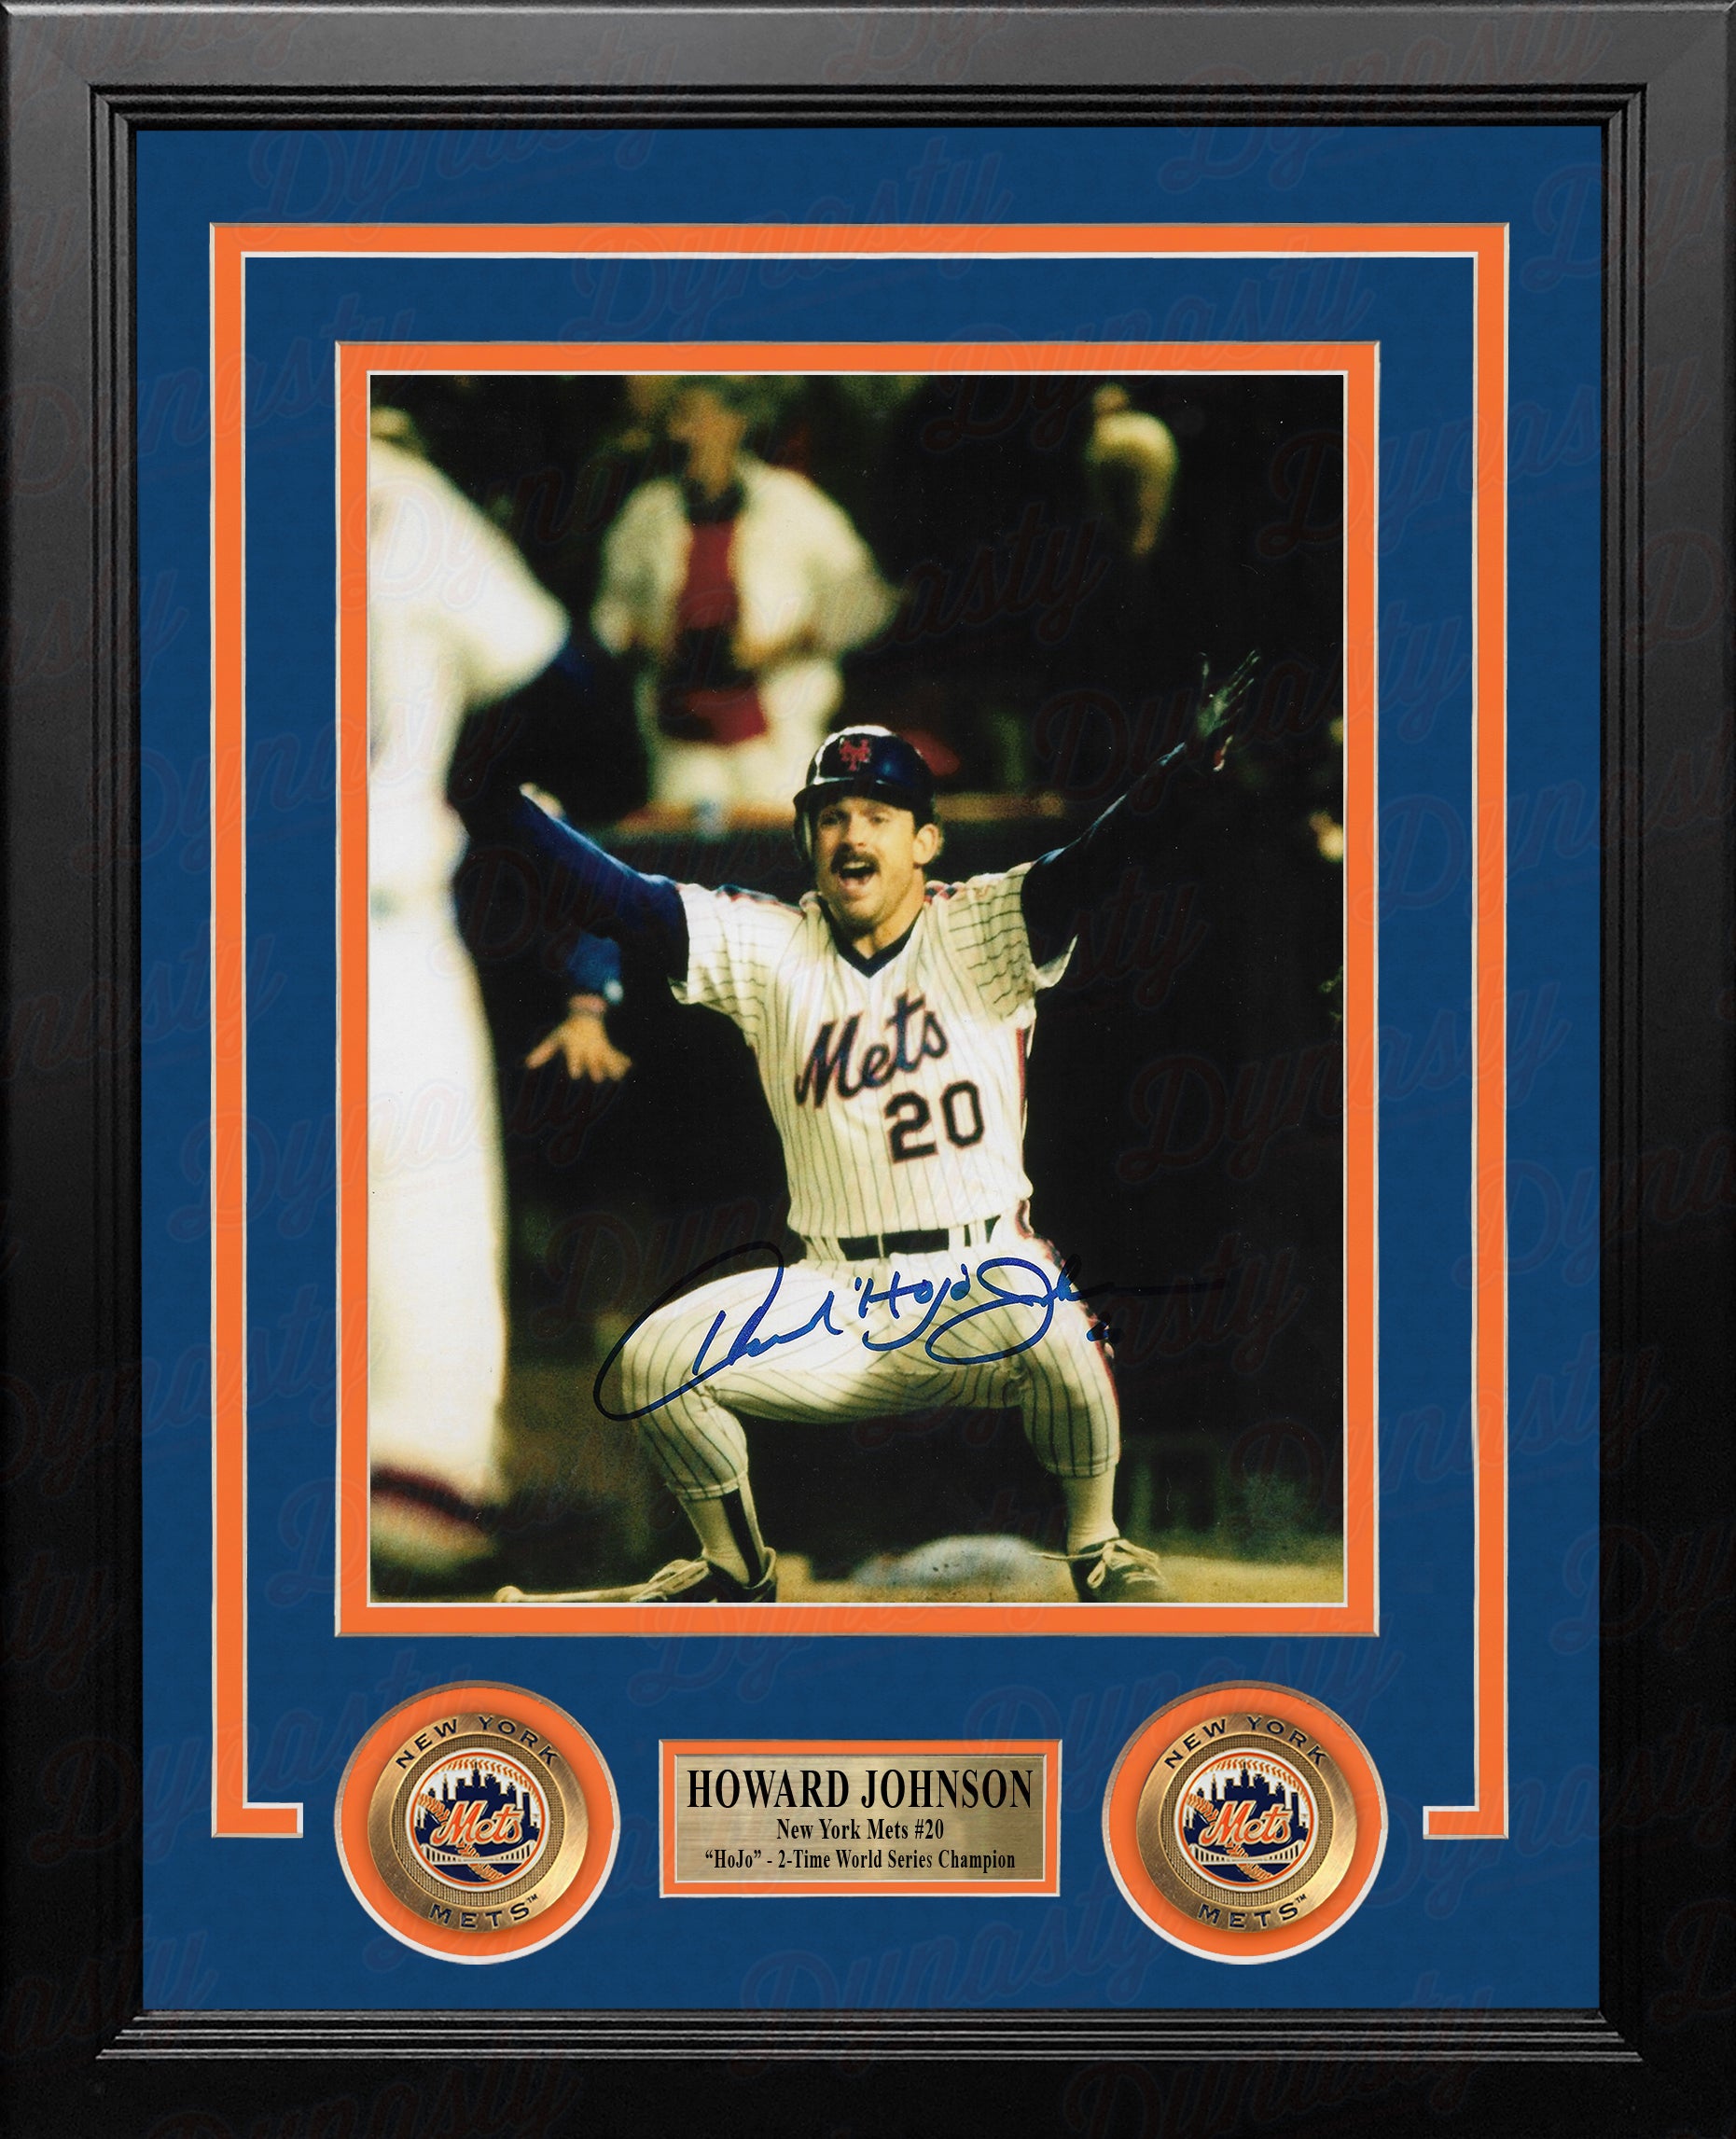 Howard Johnson Celebration New York Mets Autographed 8" x 10" Framed Baseball Photo Inscribed HoJo - Dynasty Sports & Framing 